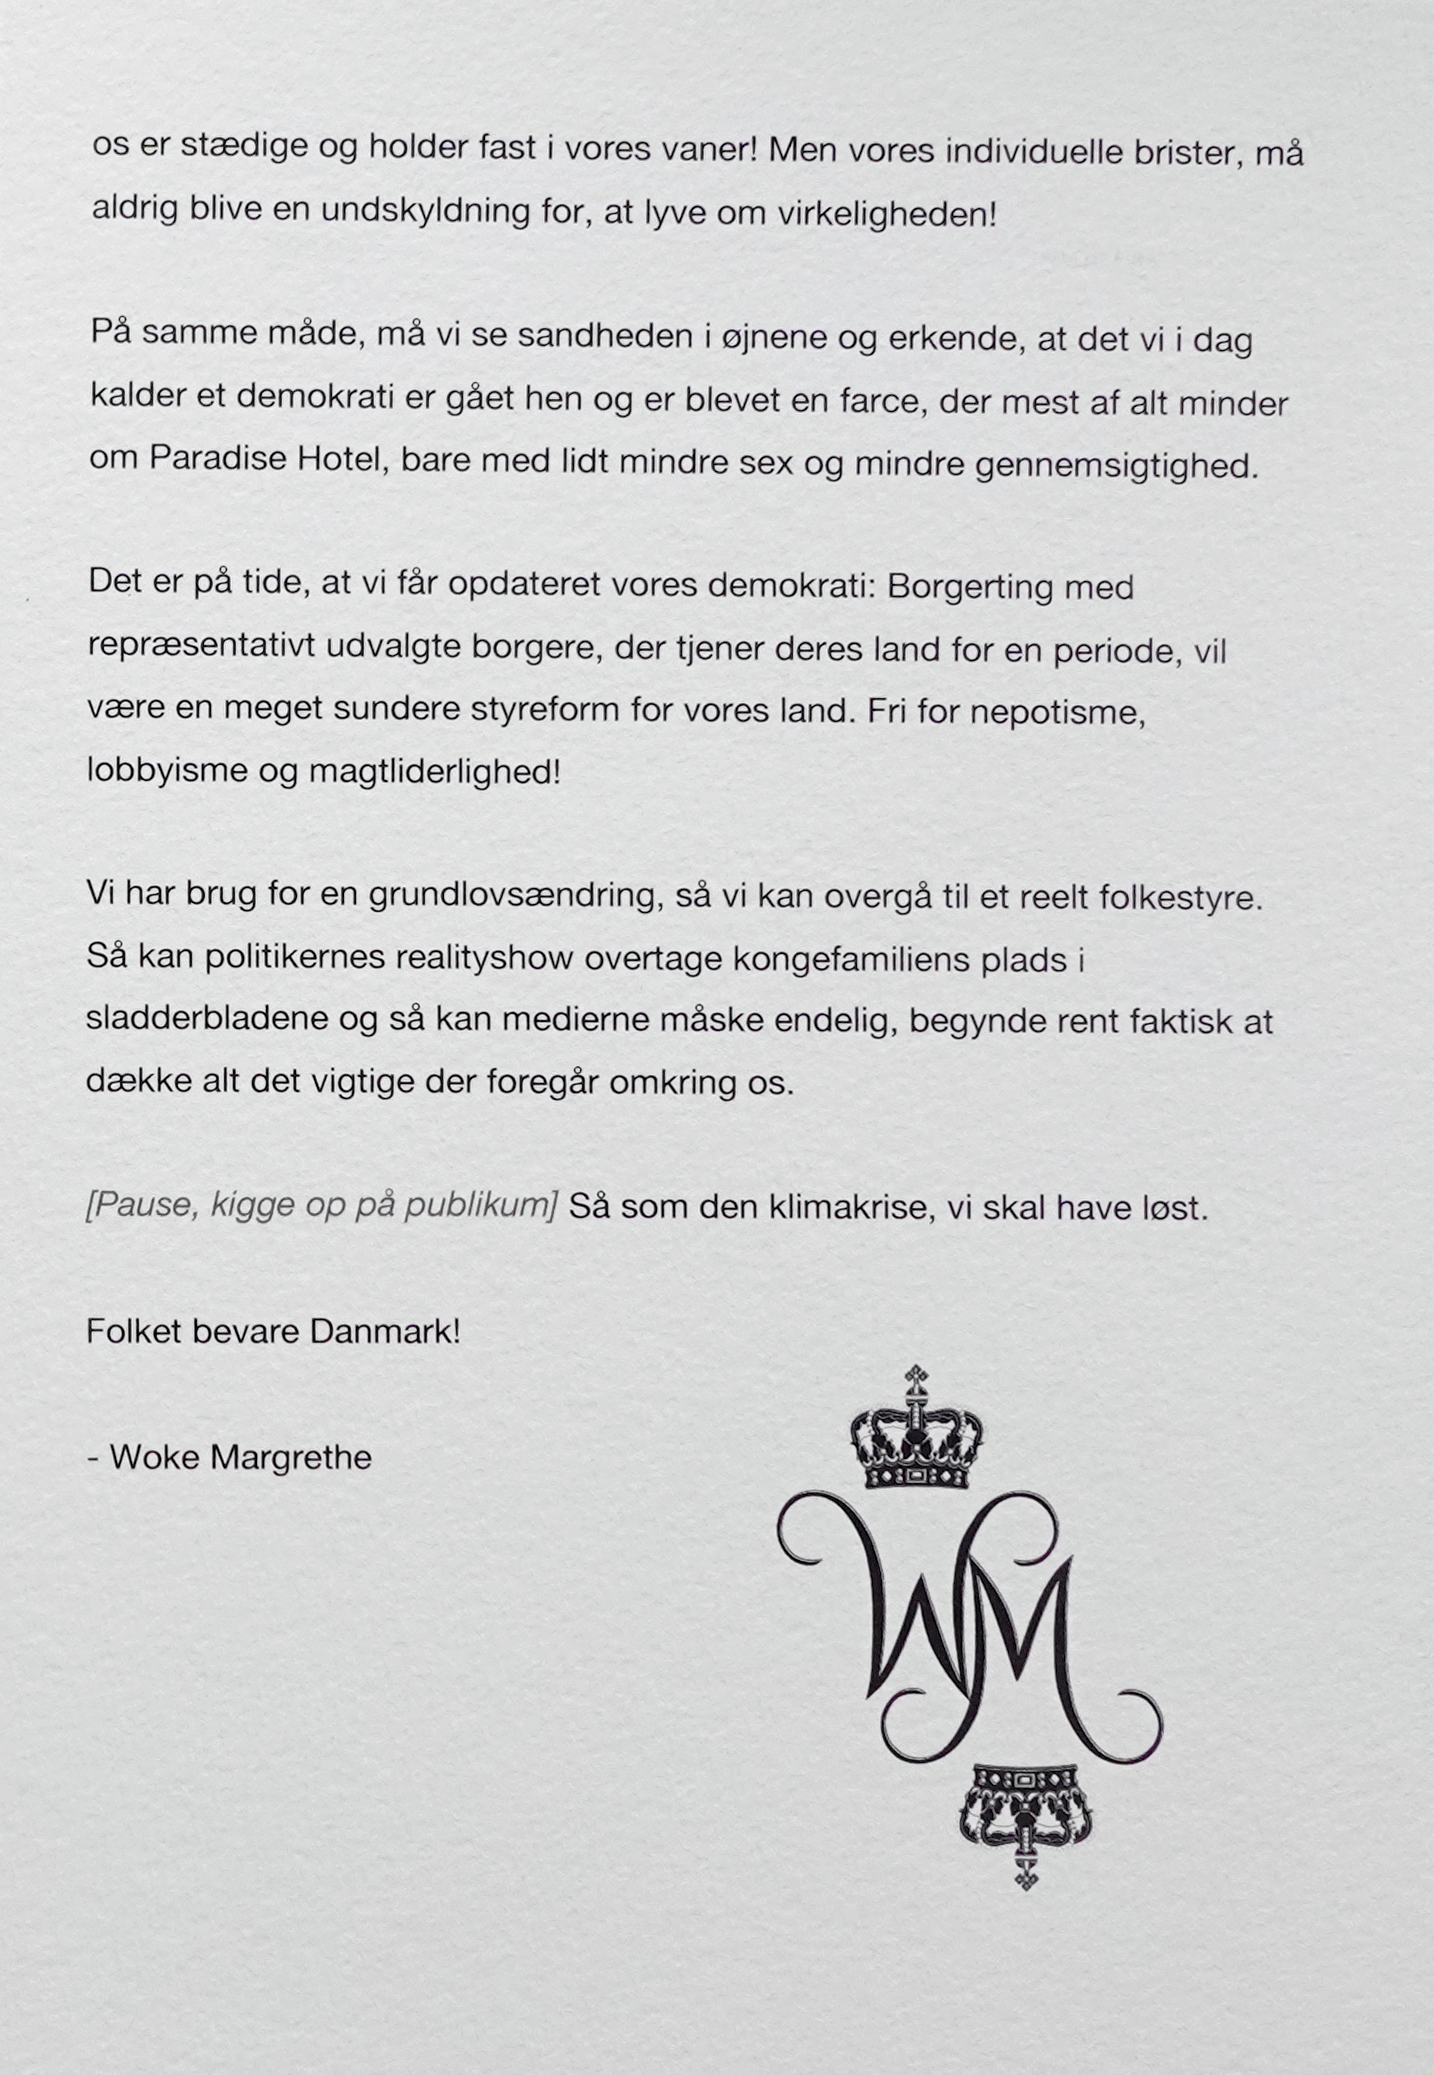 Woke Margrethe's speech